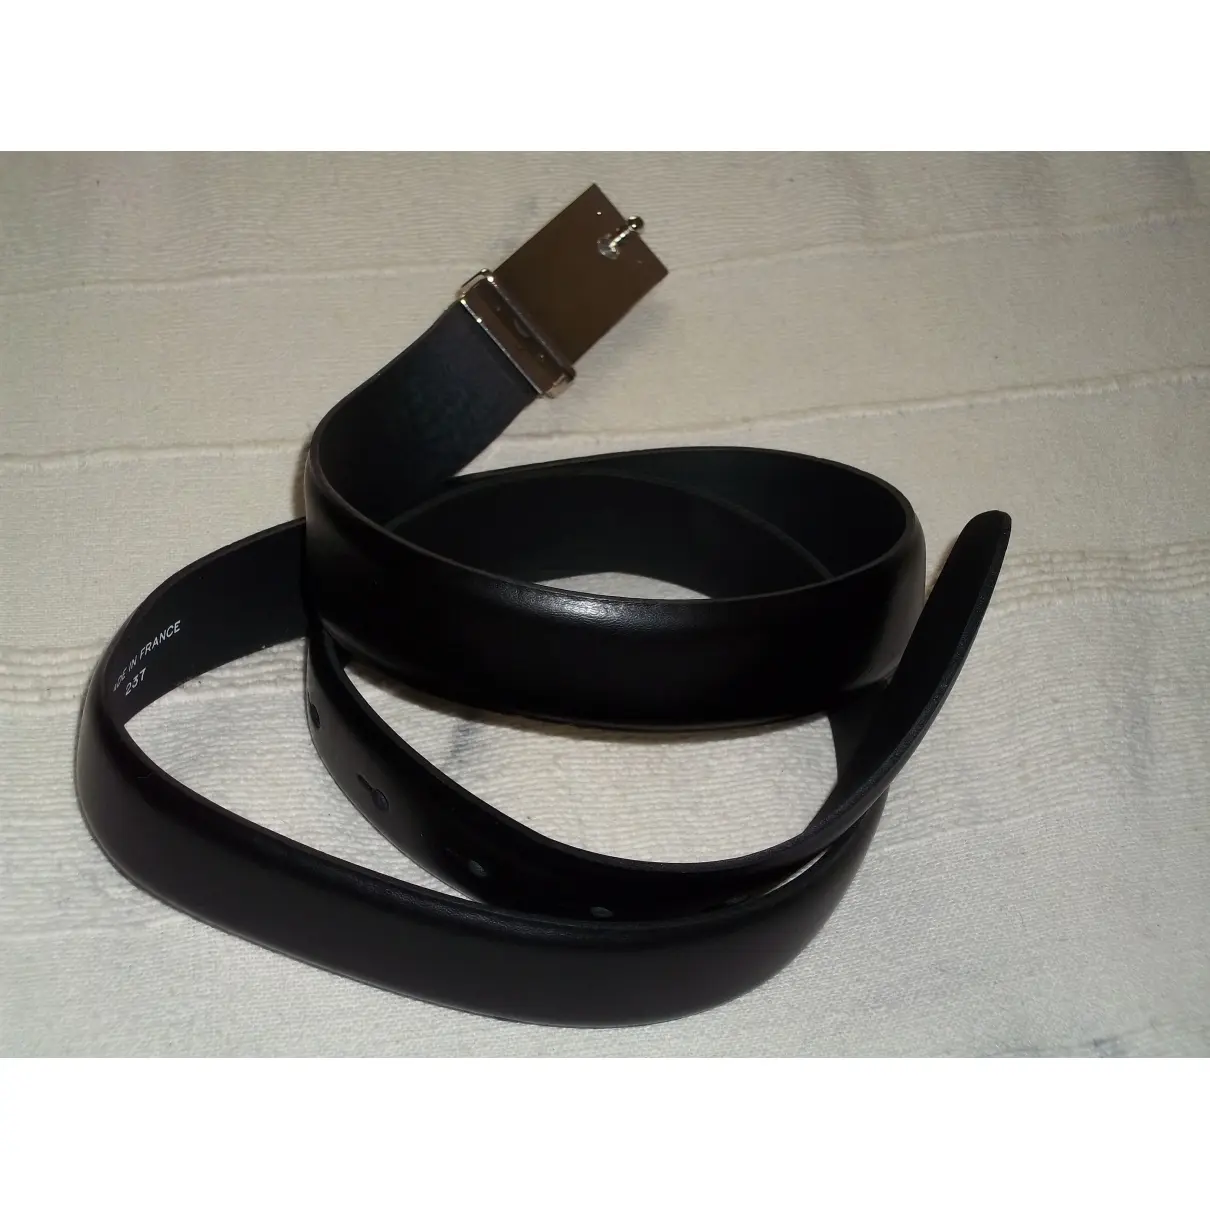 Buy Balmain Leather belt online